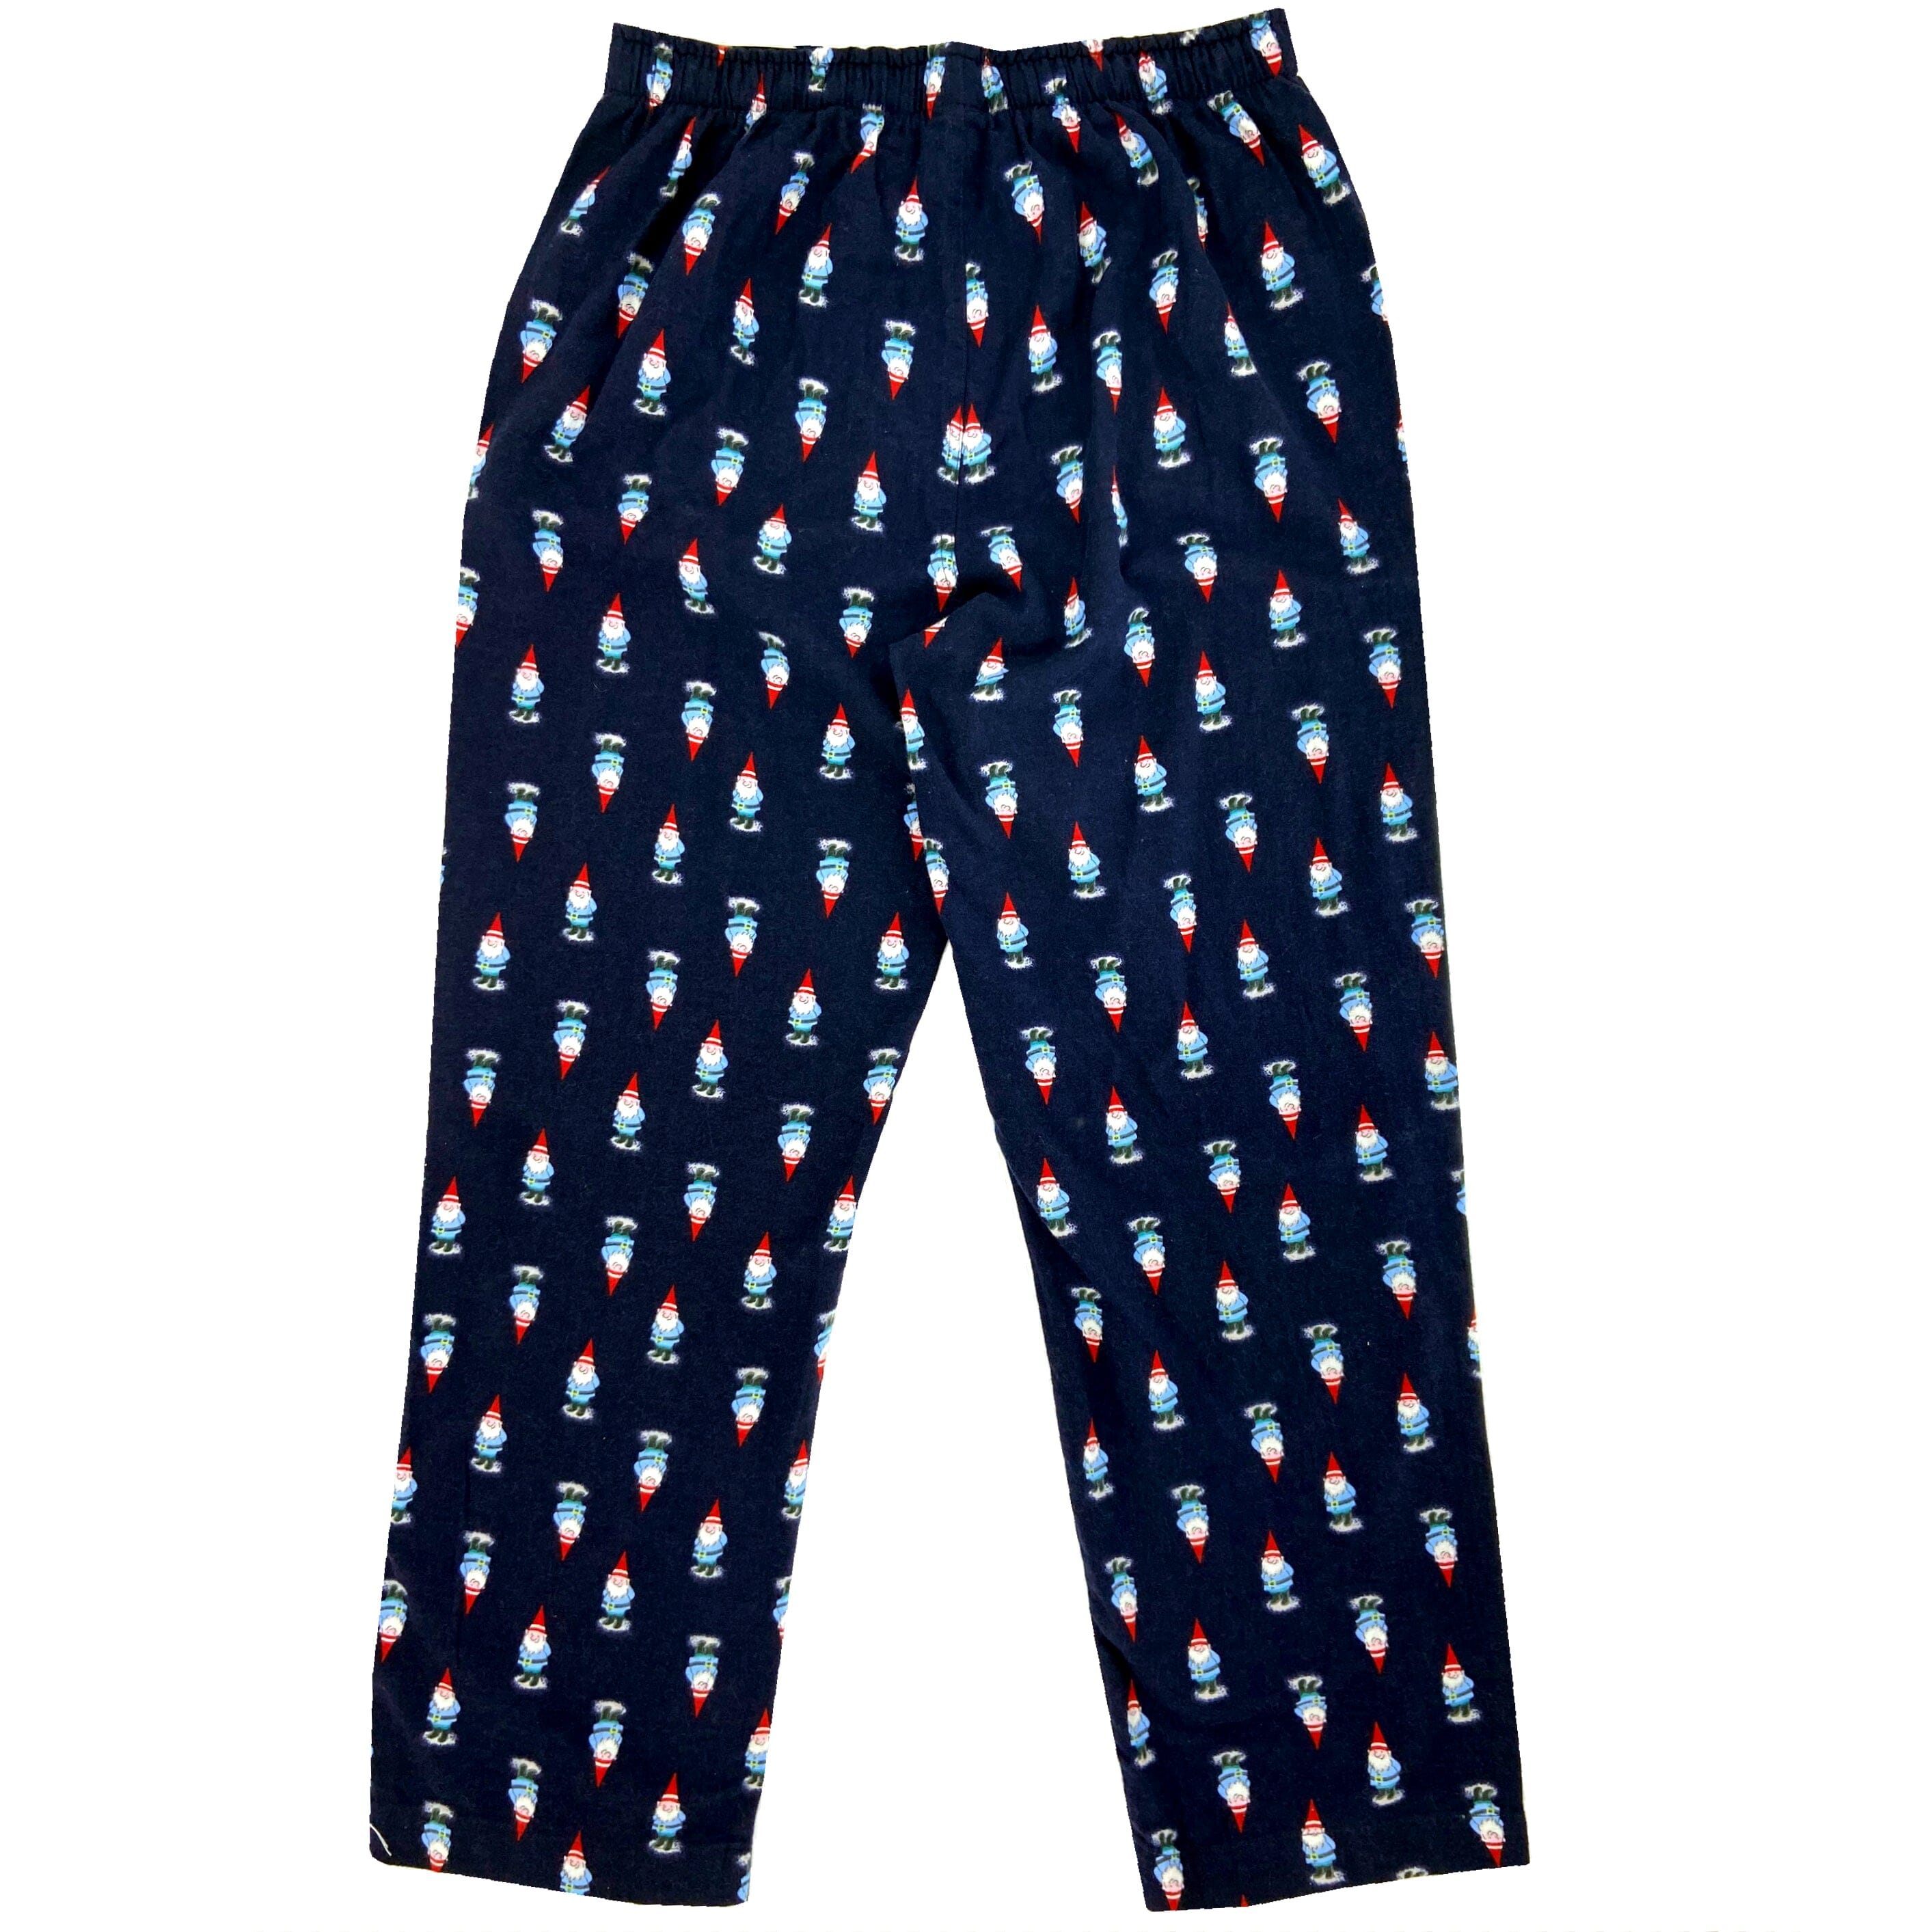 Men's Garden Gnome Patterned Printed Woven Cotton Long PJ Pajama Pants